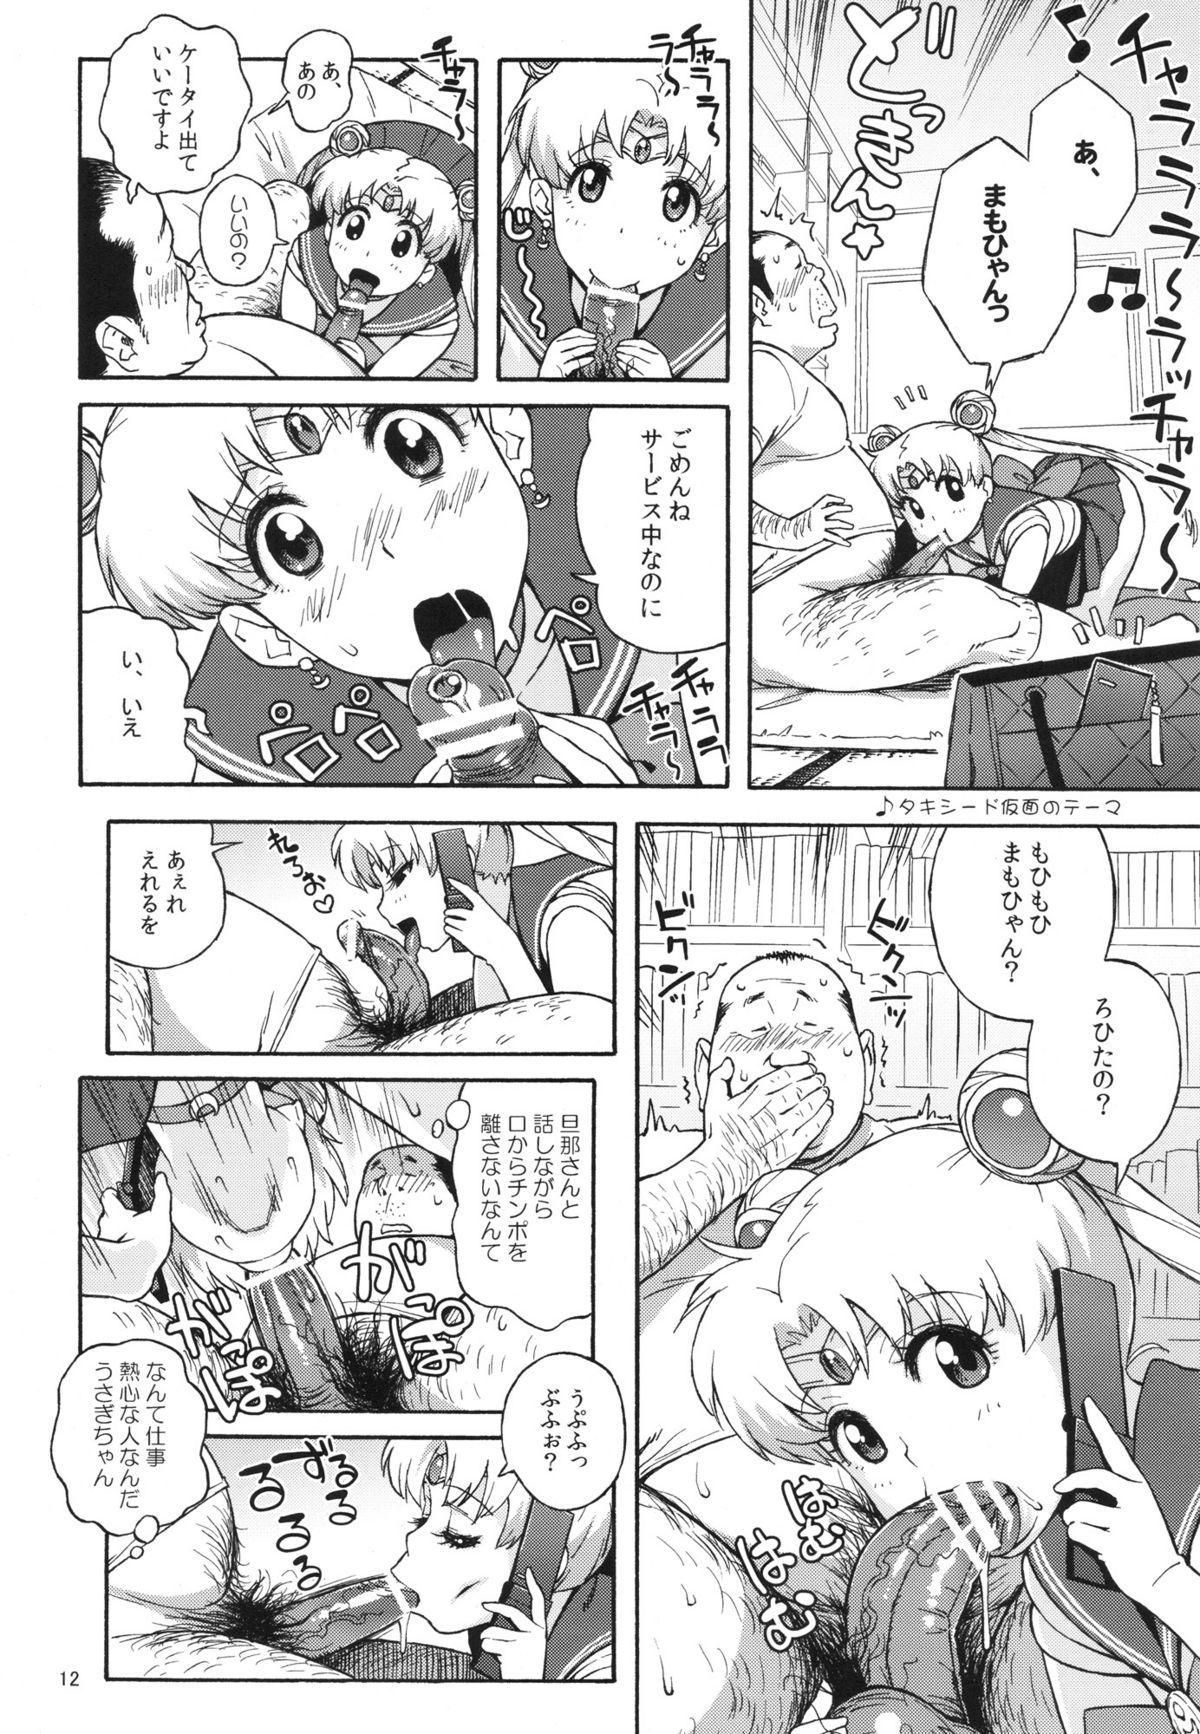 Leite DELI Ii Usagi - Sailor moon Storyline - Page 11